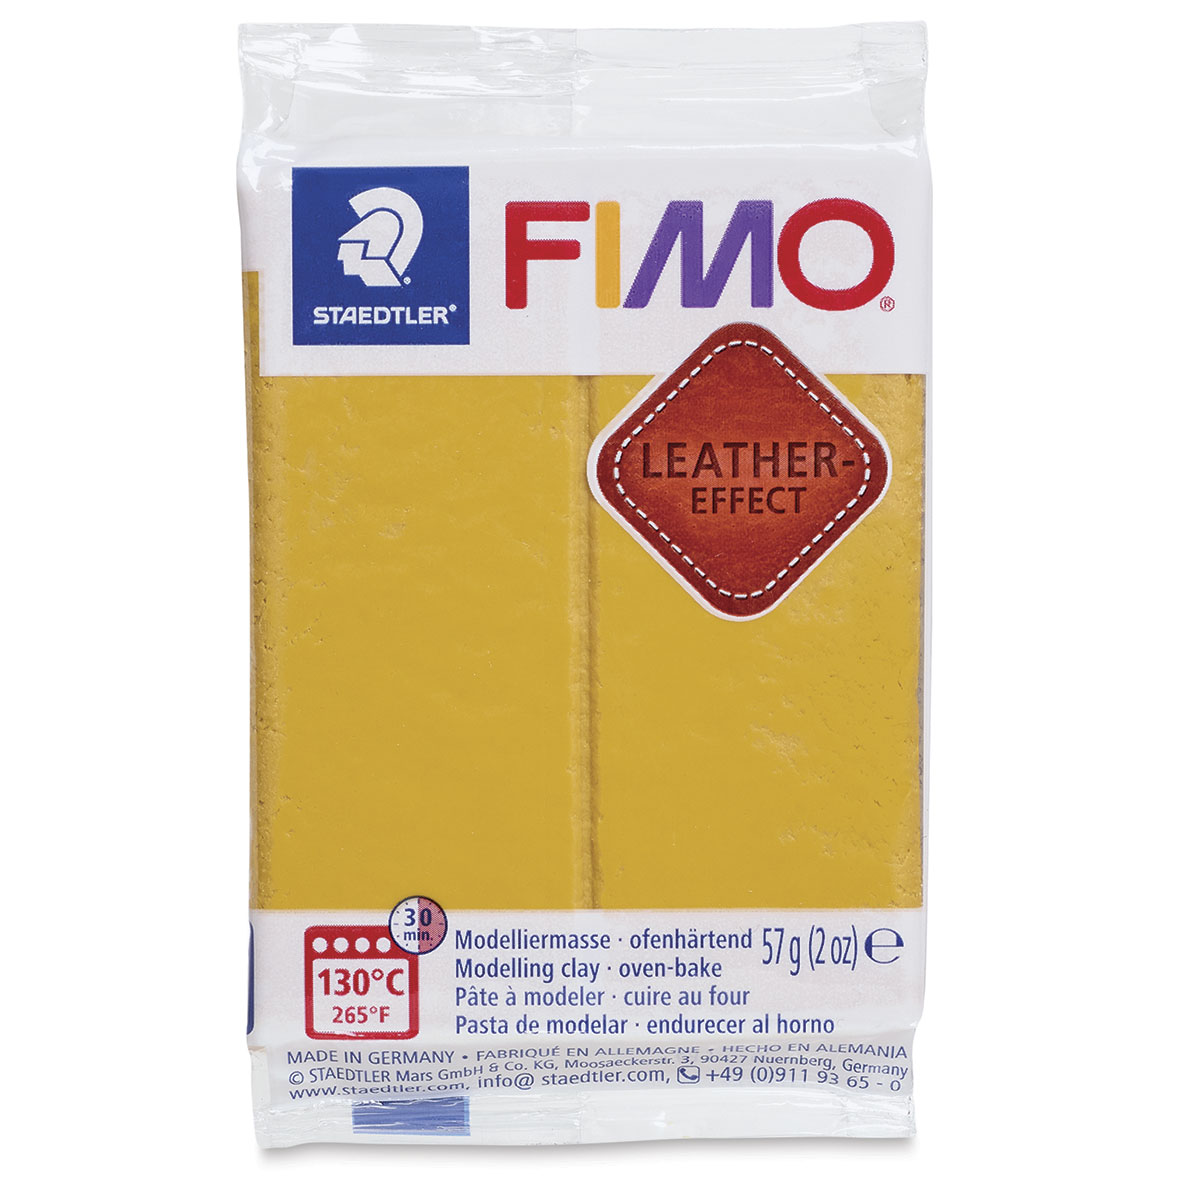 Staedtler Fimo Leather Effect Bookmark Kit